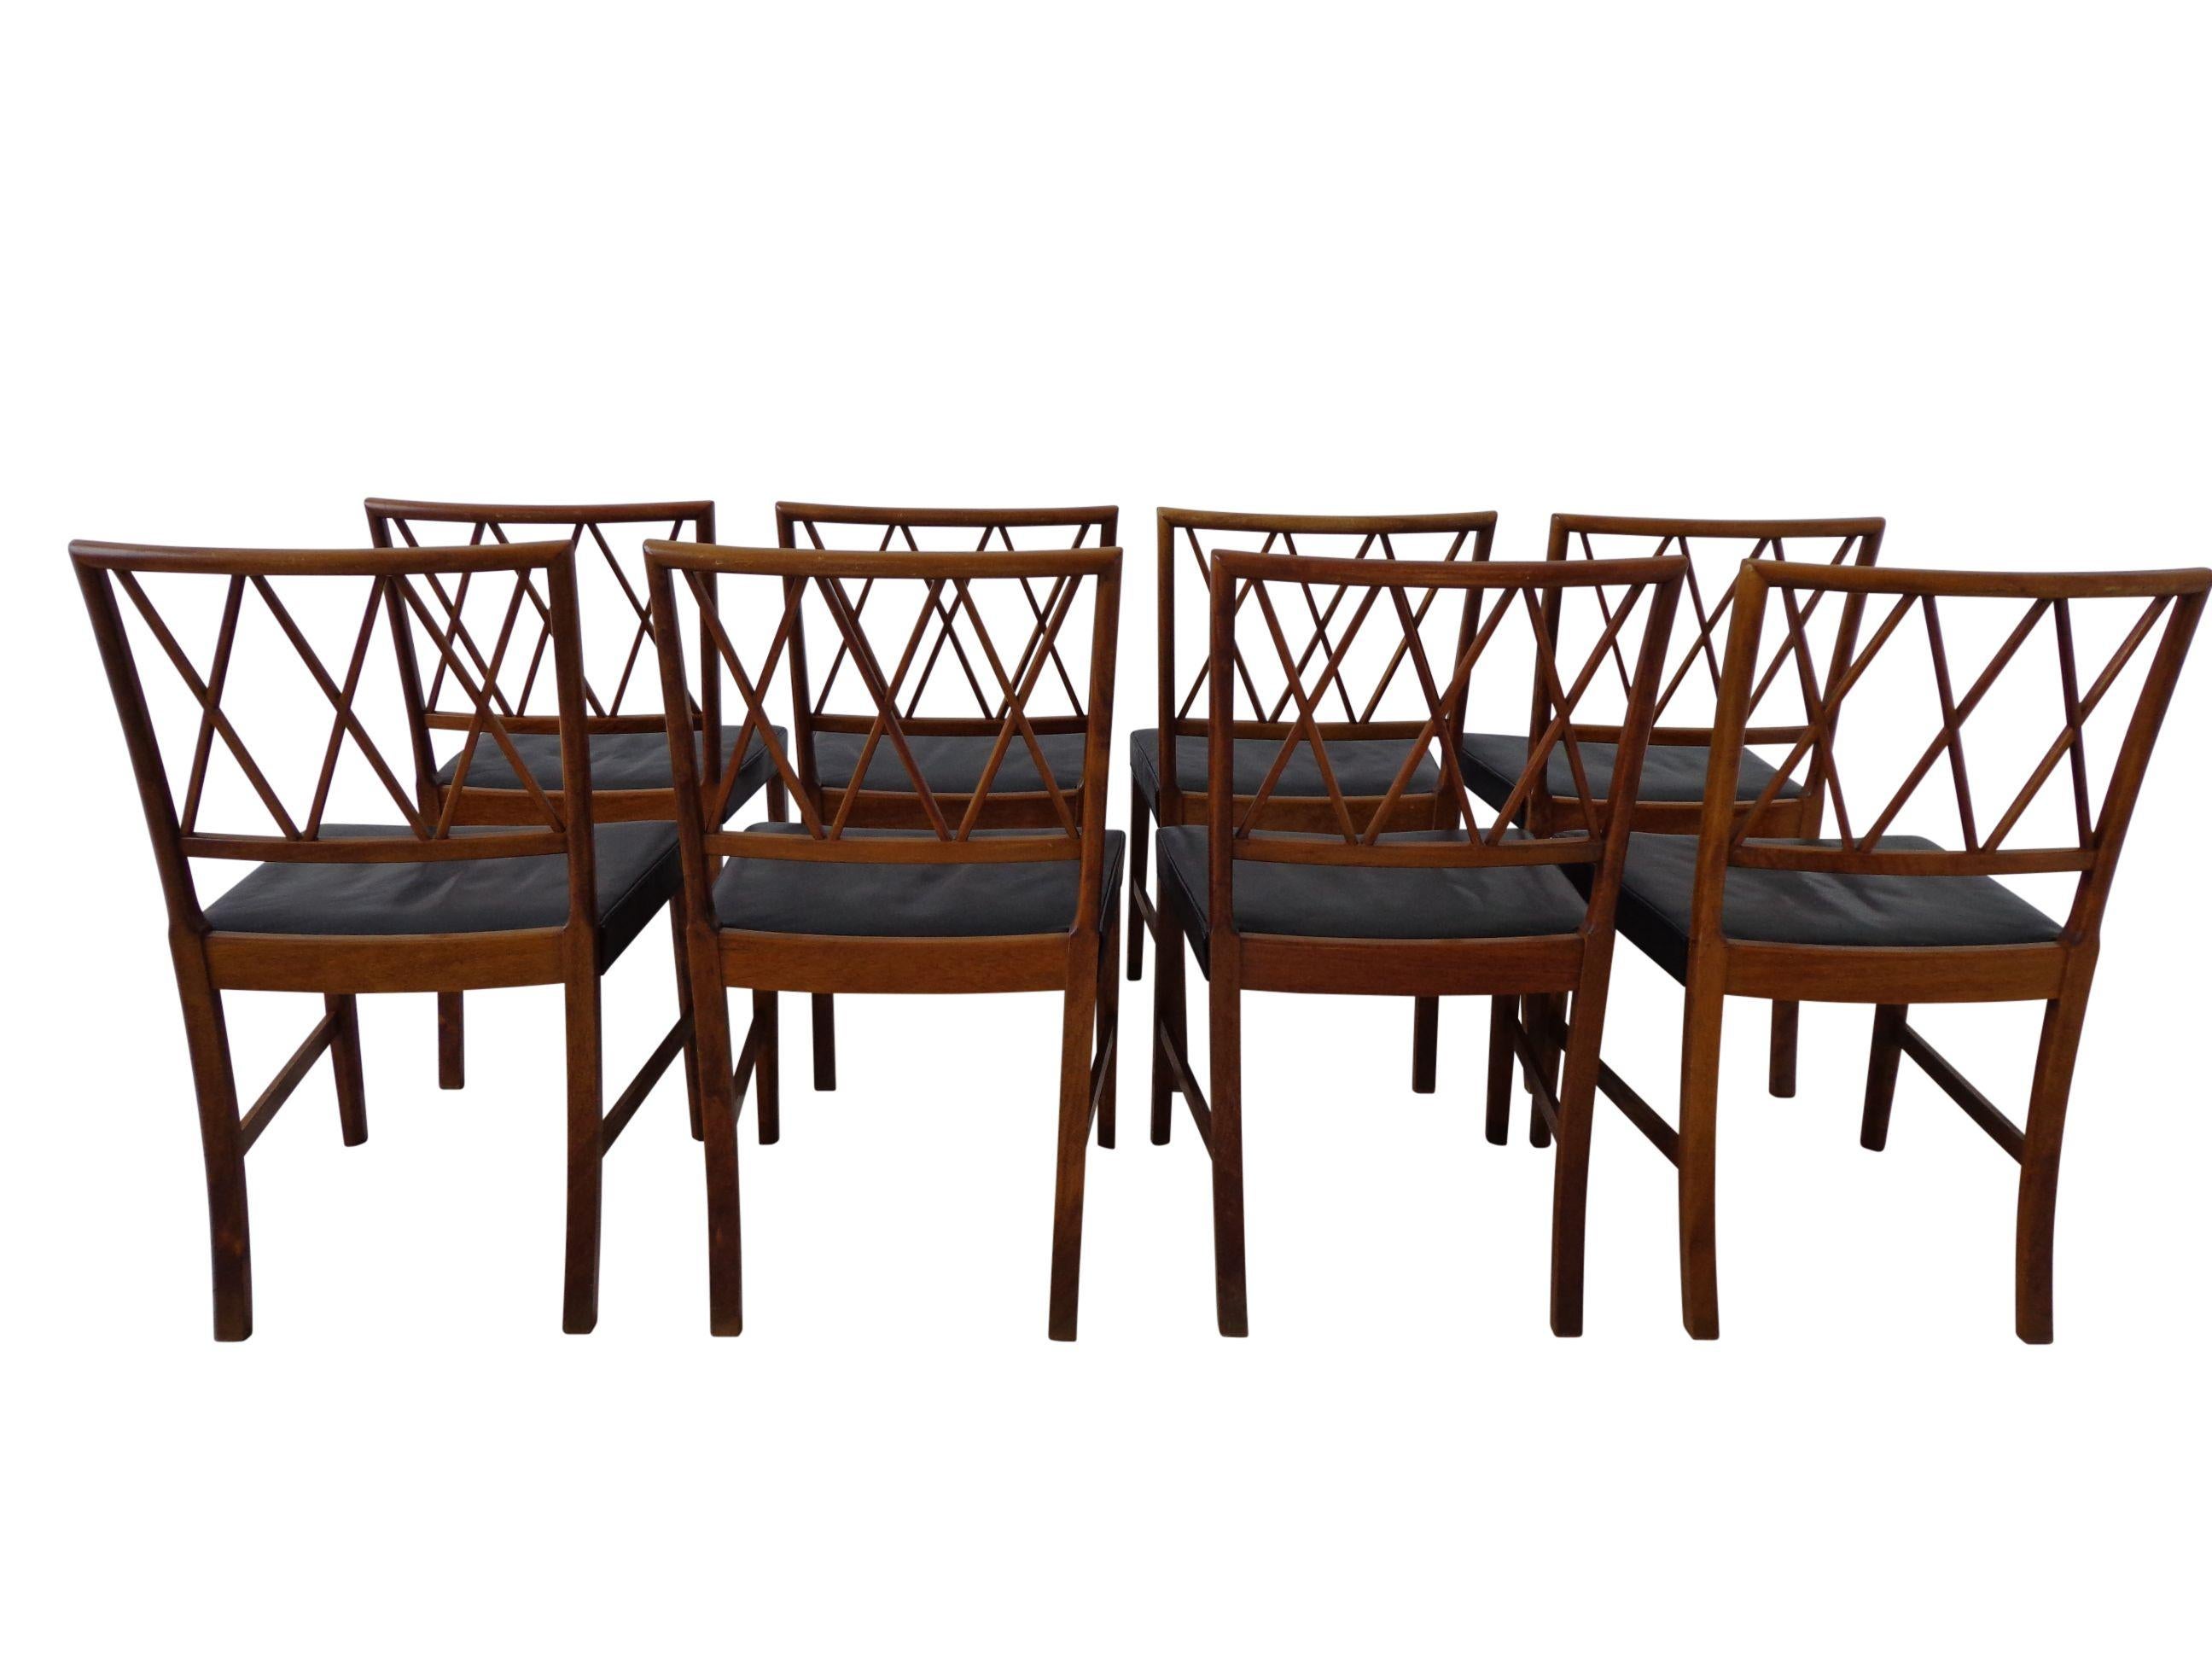 Scandinavian Modern Ole Wanscher Dining Chairs by Cabinetmaker A.J Iversen in Denmark 1940s For Sale